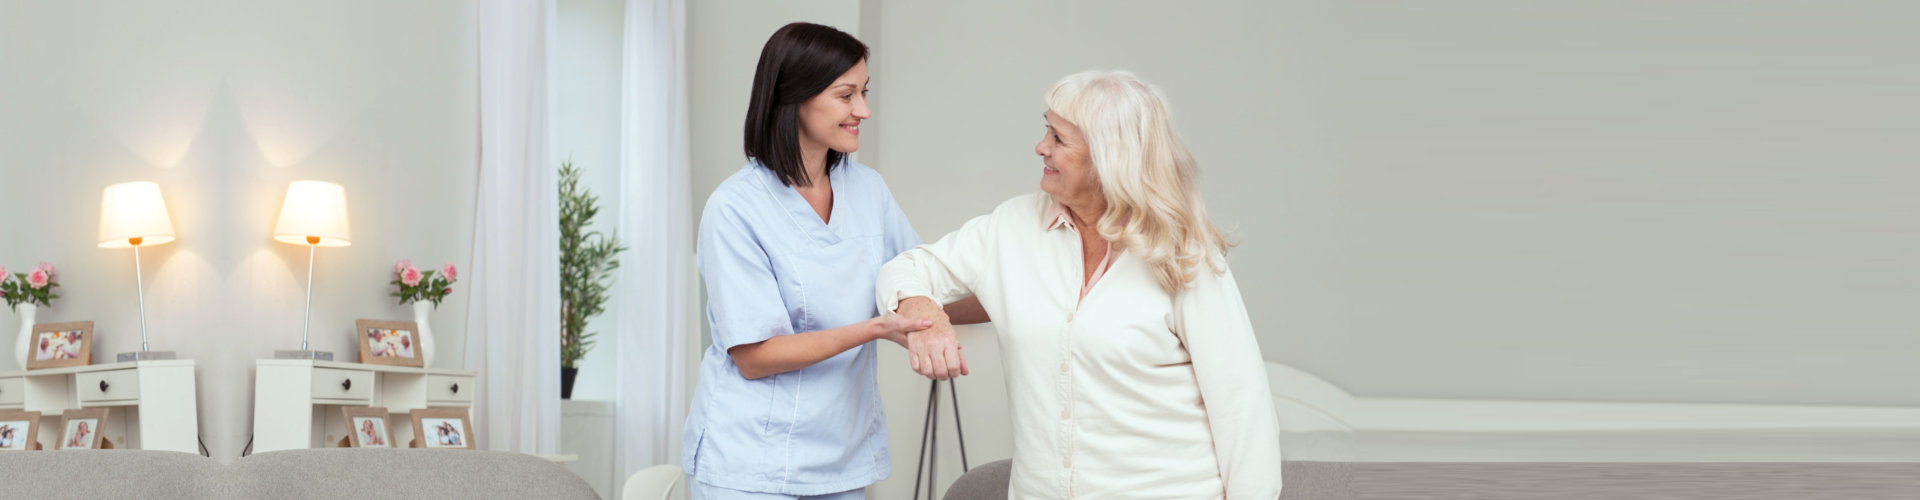 caregiver assisting senior woman